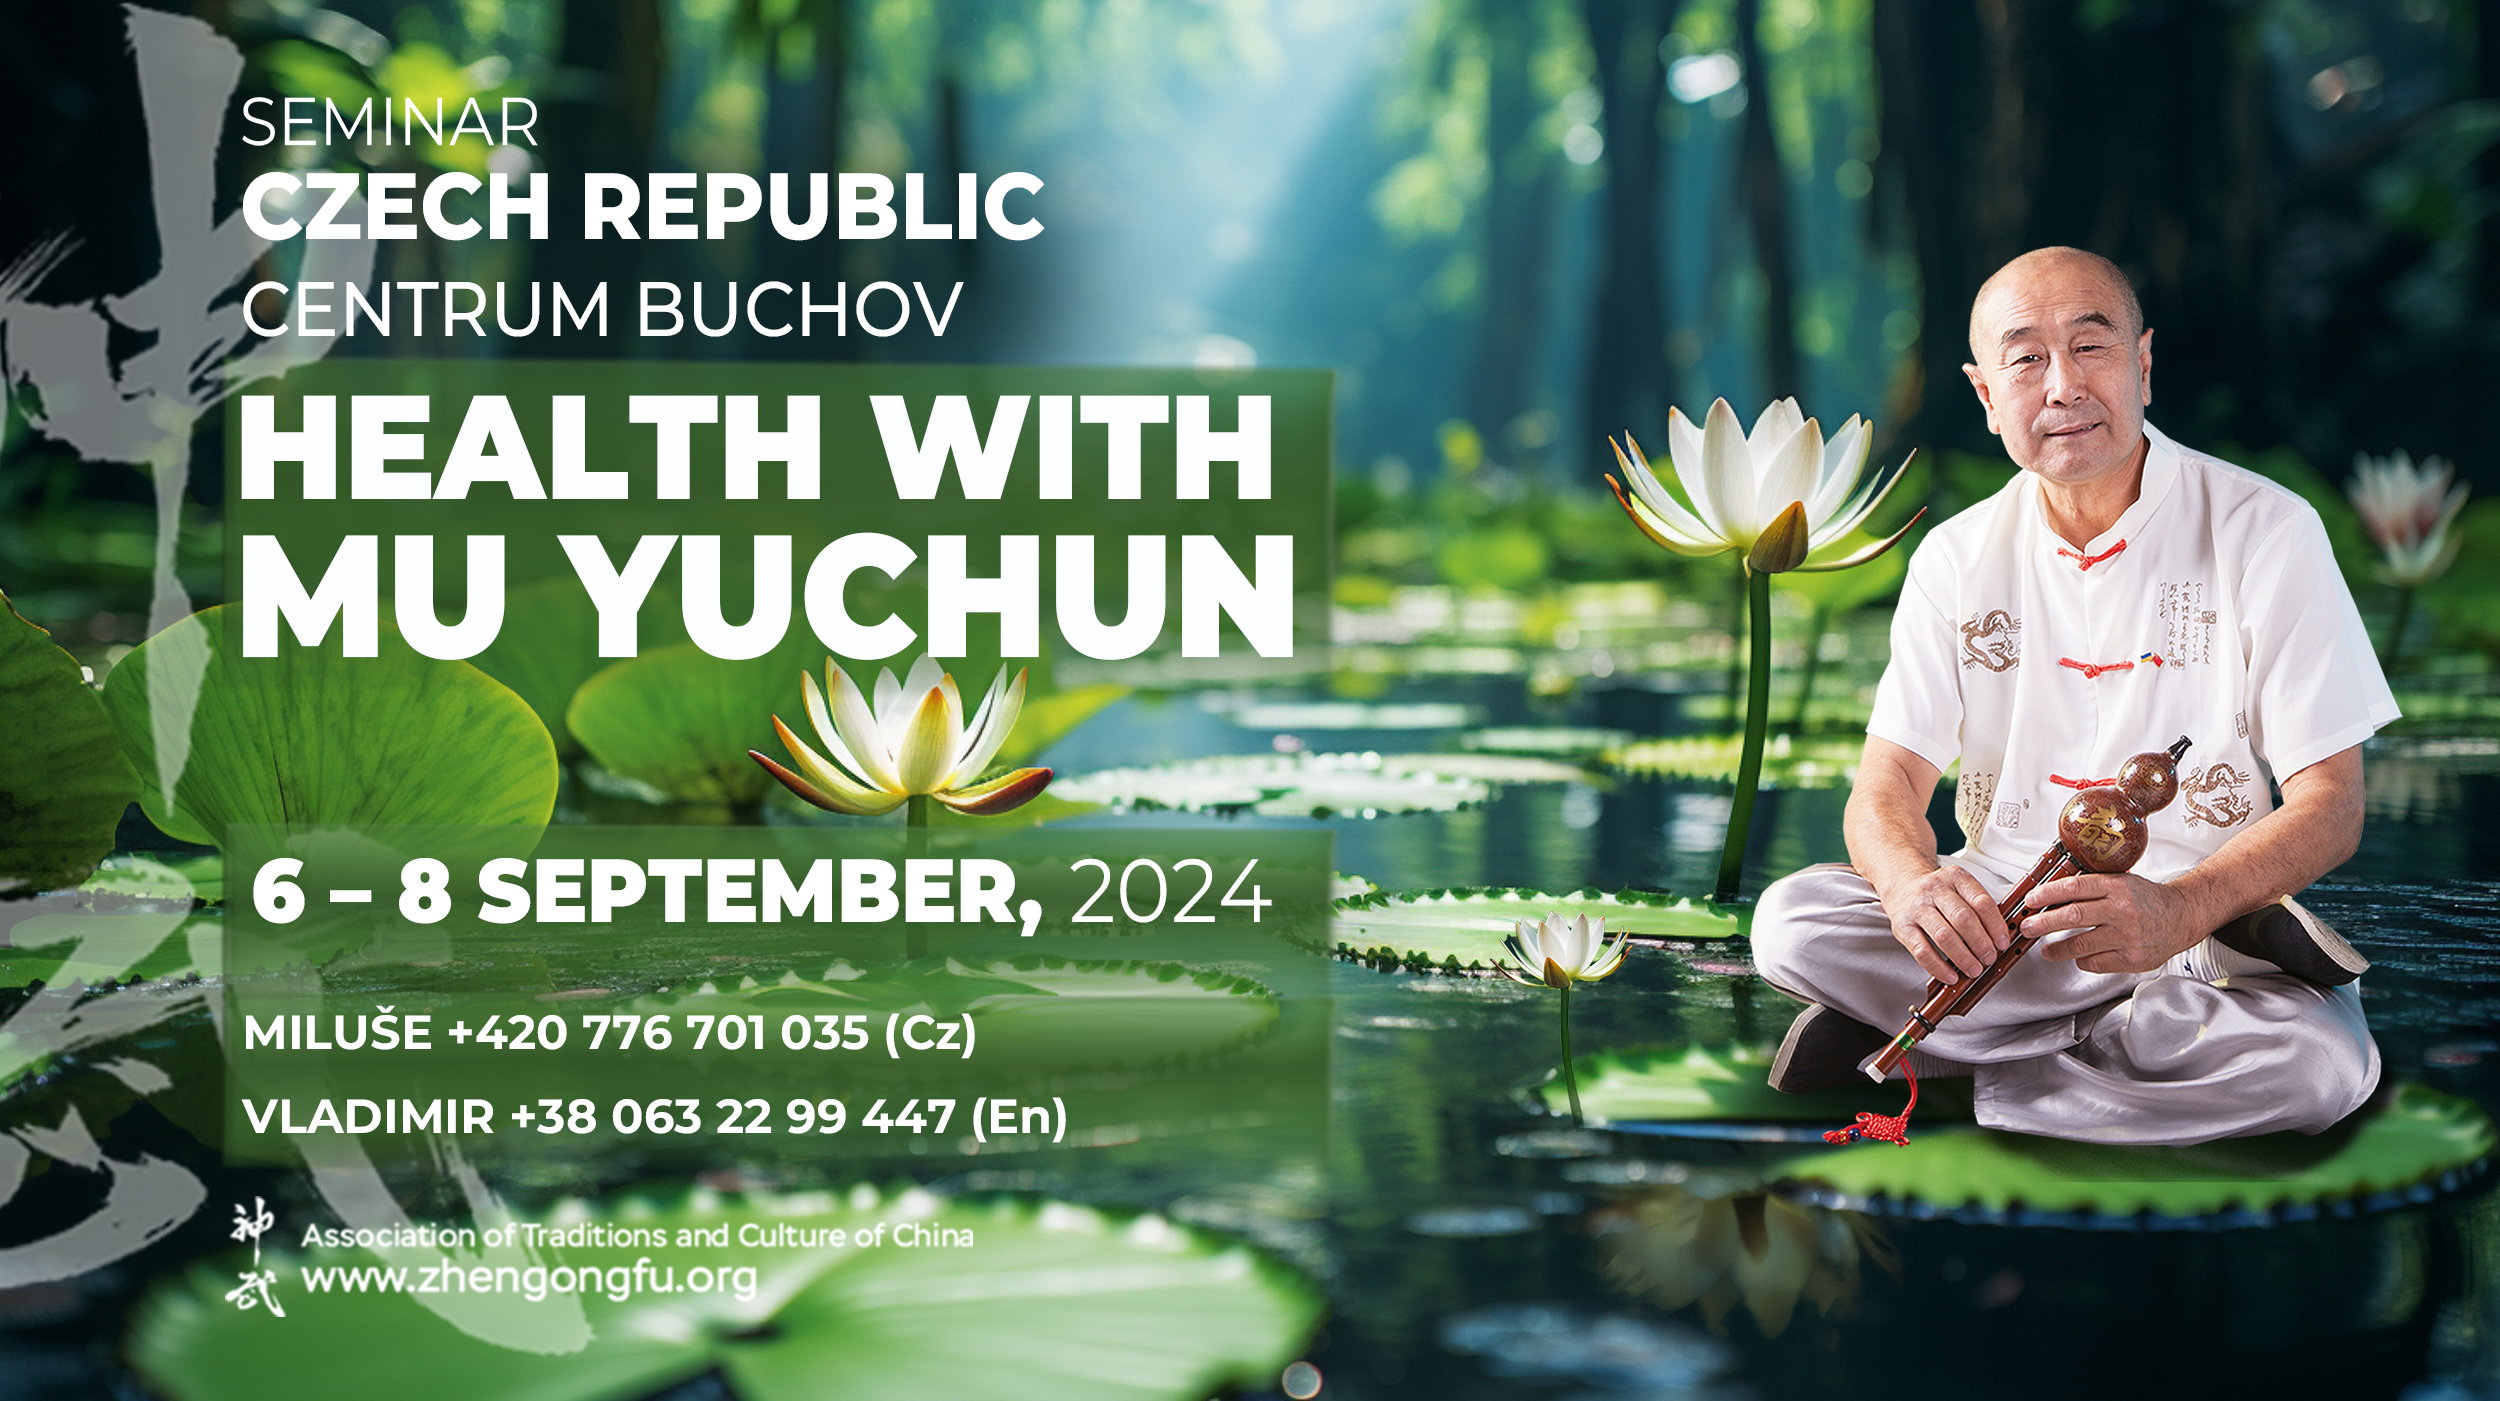 Czech Republic. Centrum Buchov. Sеminar "Health with Master Mu Yuchun". 6-8 september 2024.